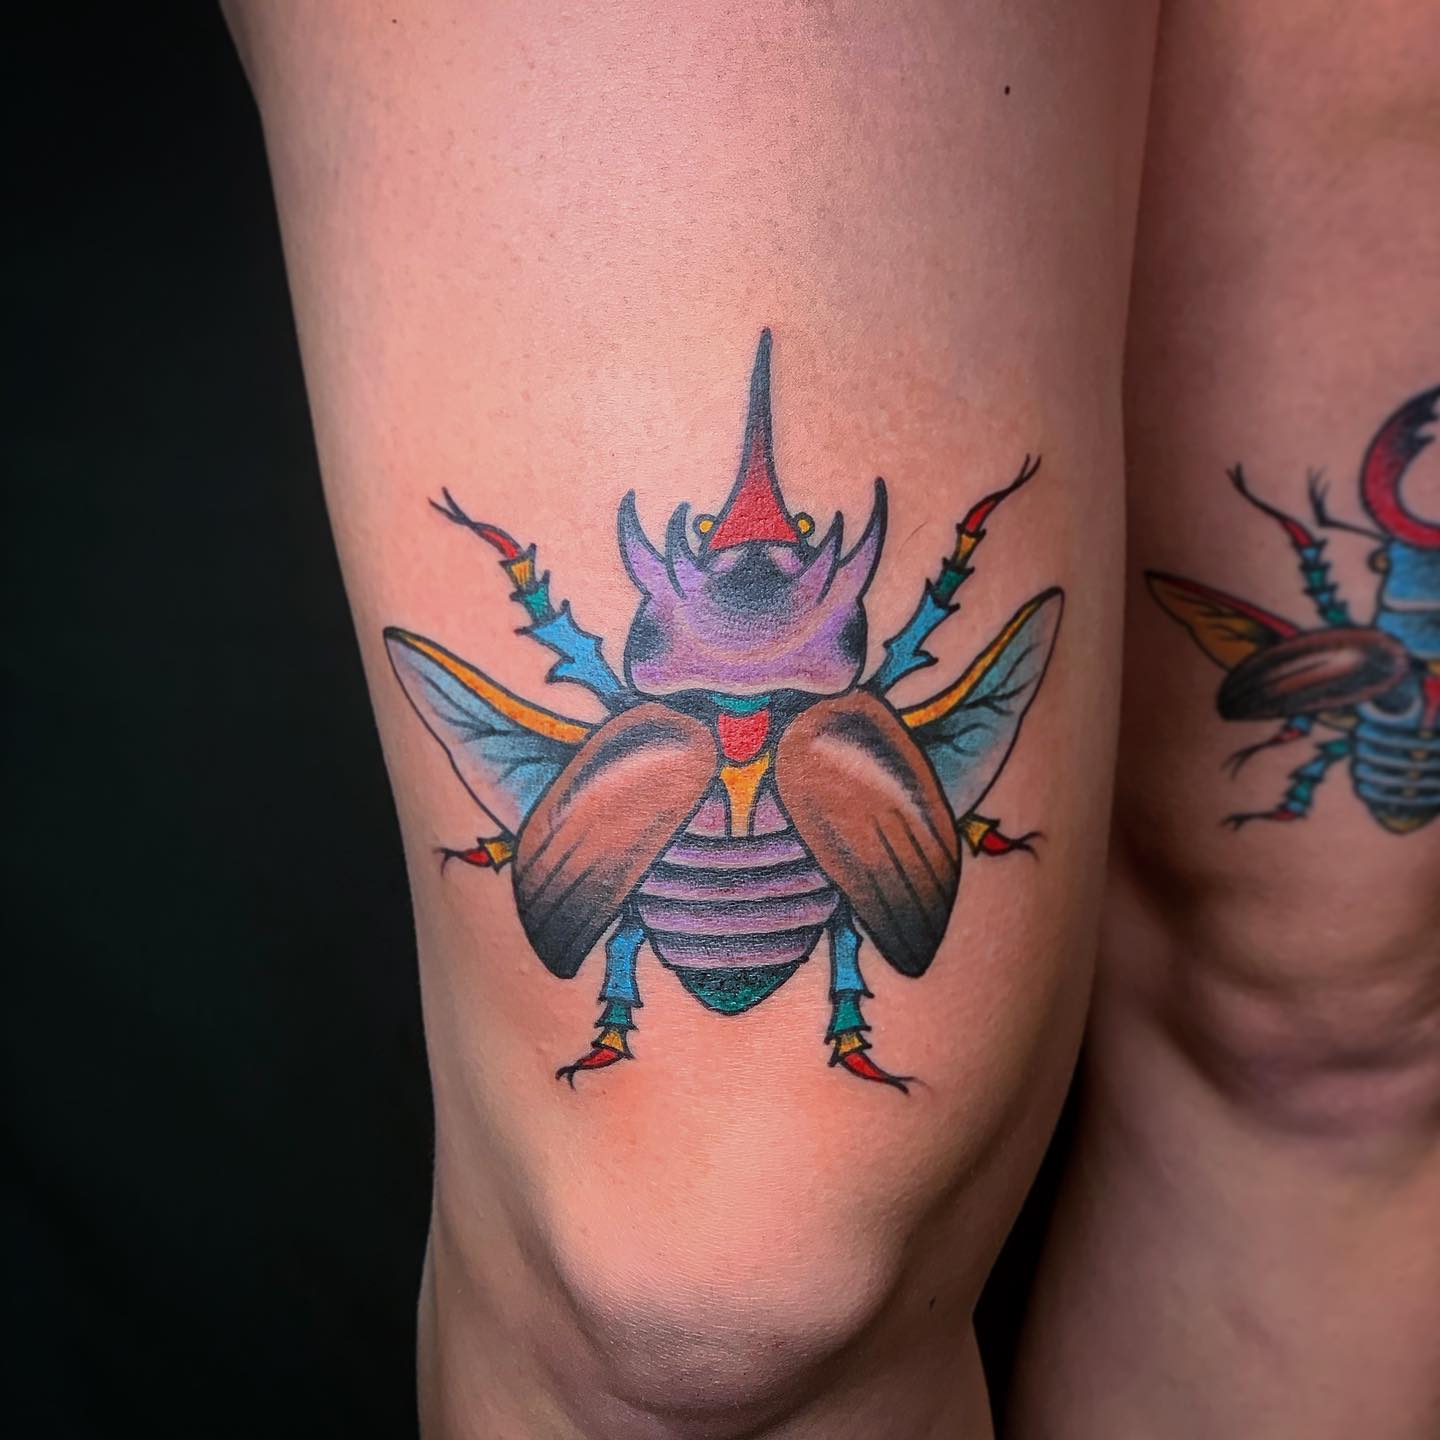 Tatuaje de insecto encima de la rodilla